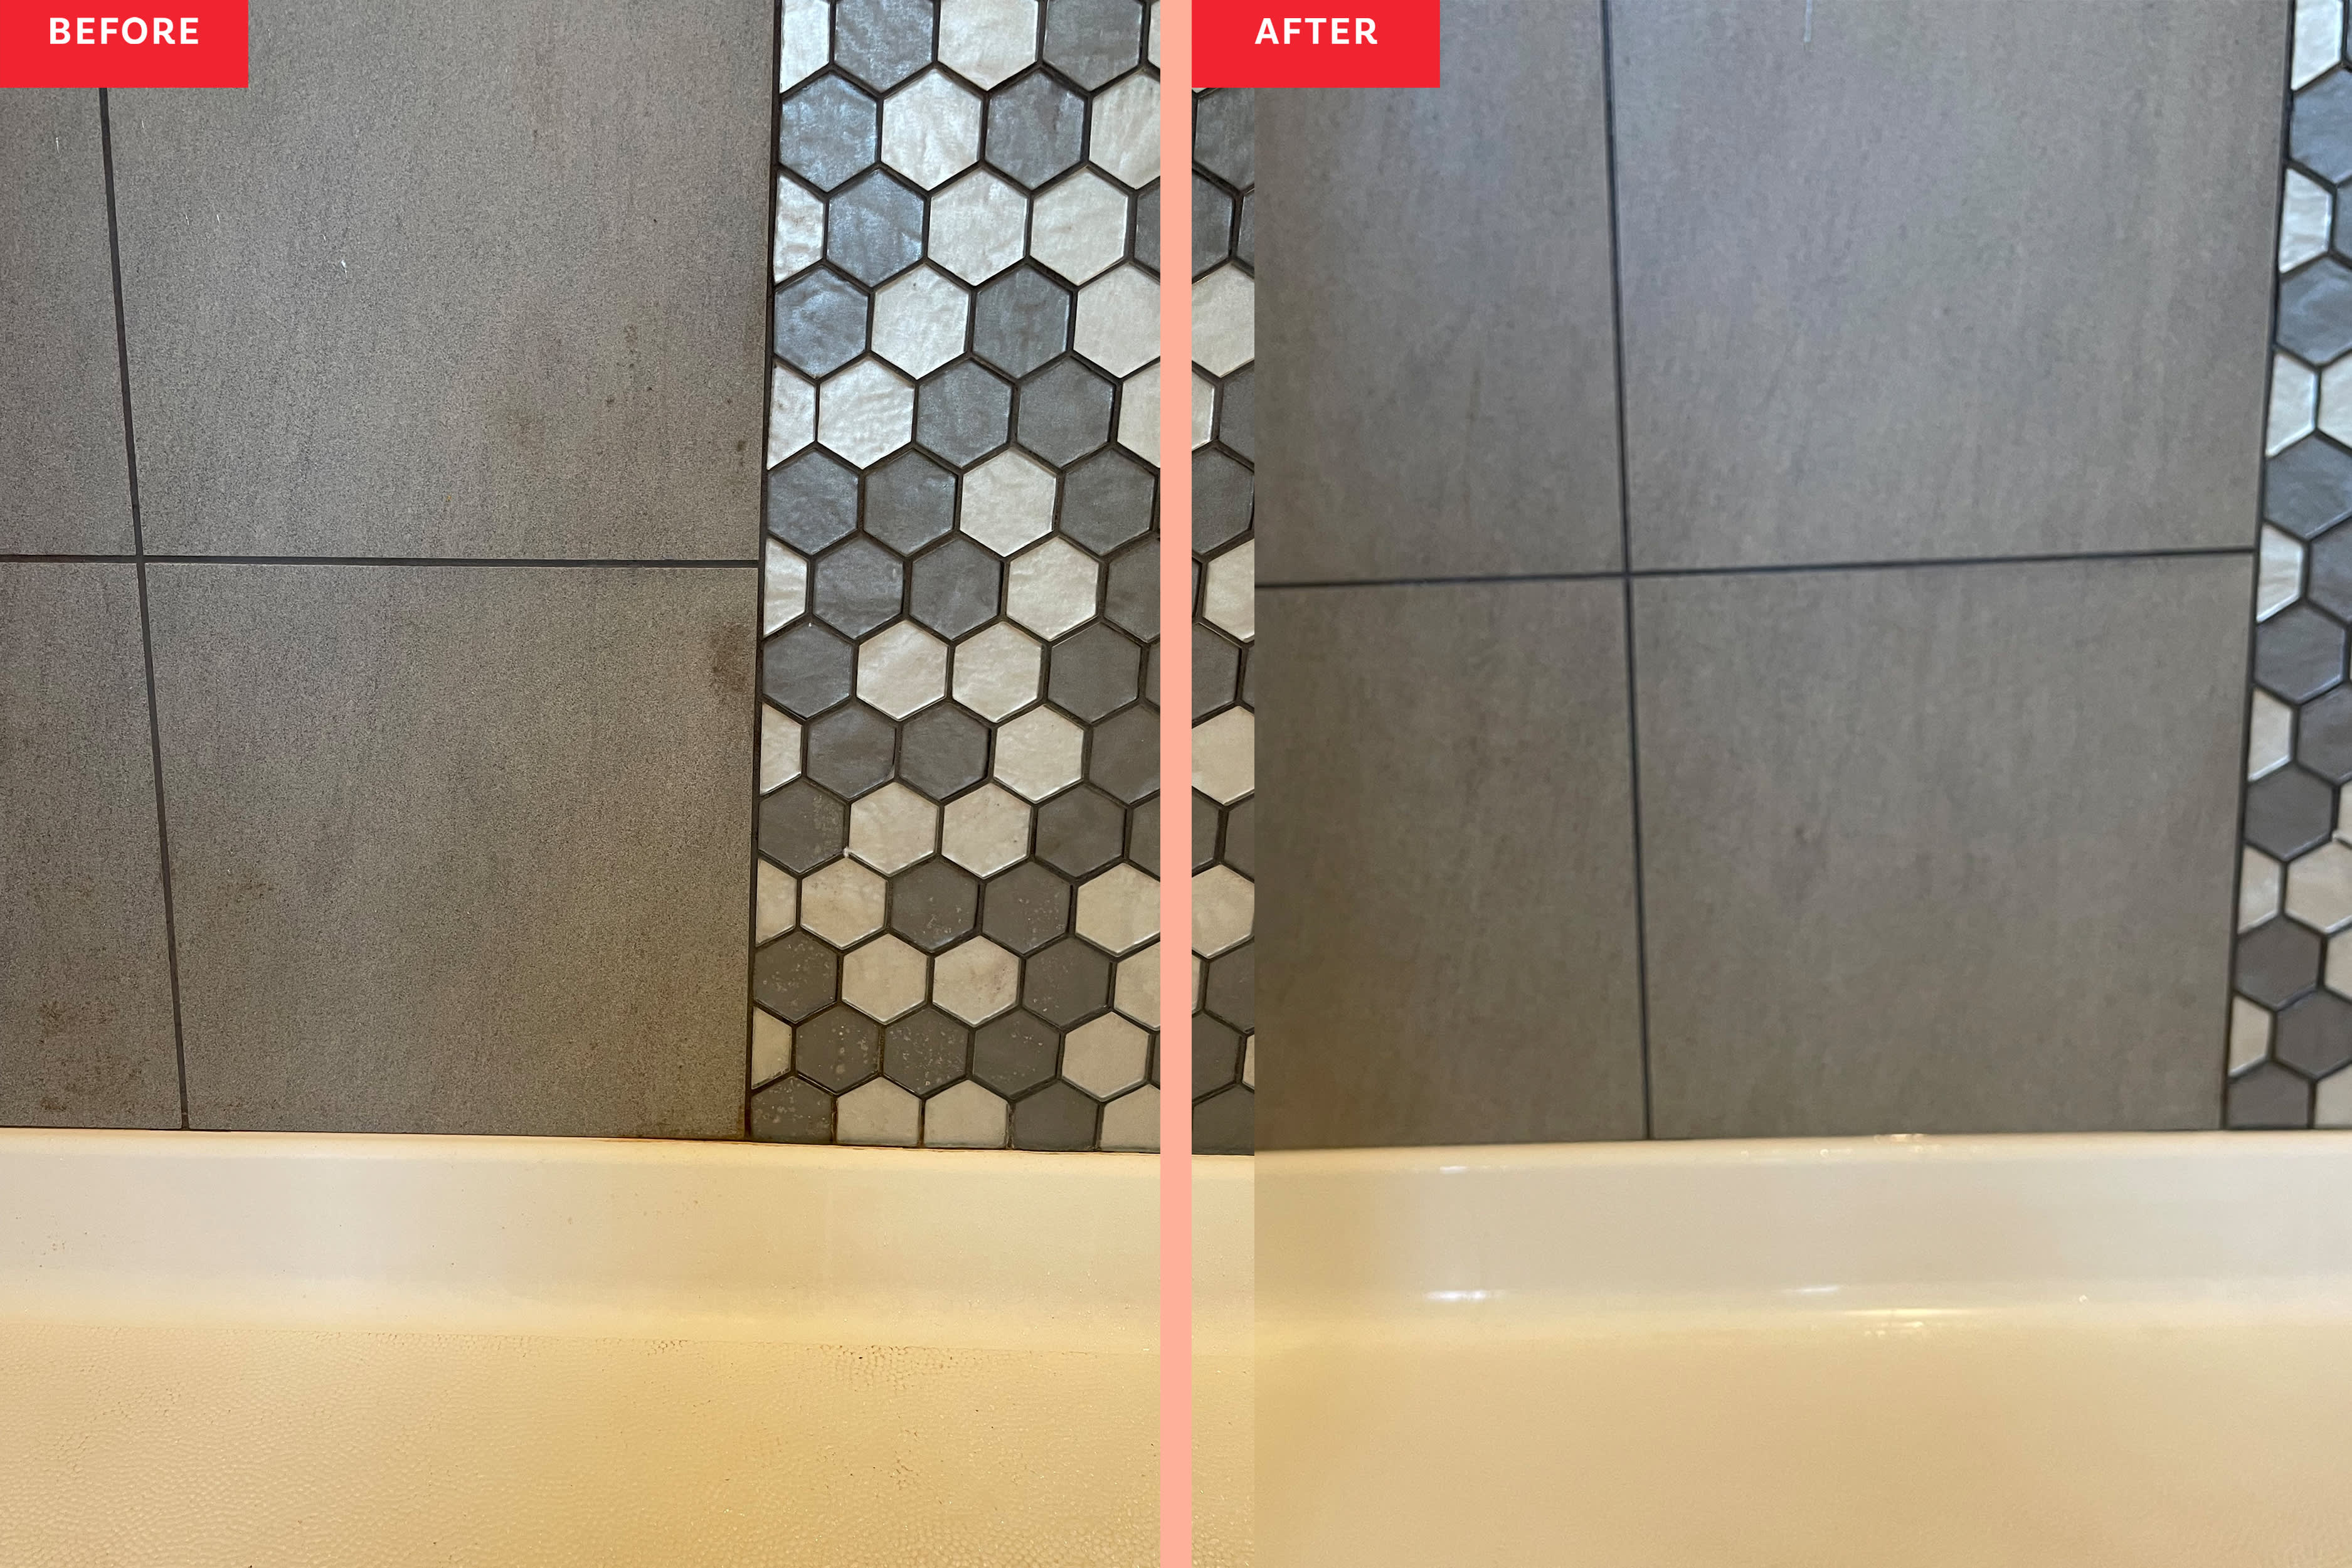 https://cdn.apartmenttherapy.info/image/upload/v1675119789/at/organize-clean/before-after/Jordan-Souza-Shower/shower-tiles-diptych.jpg